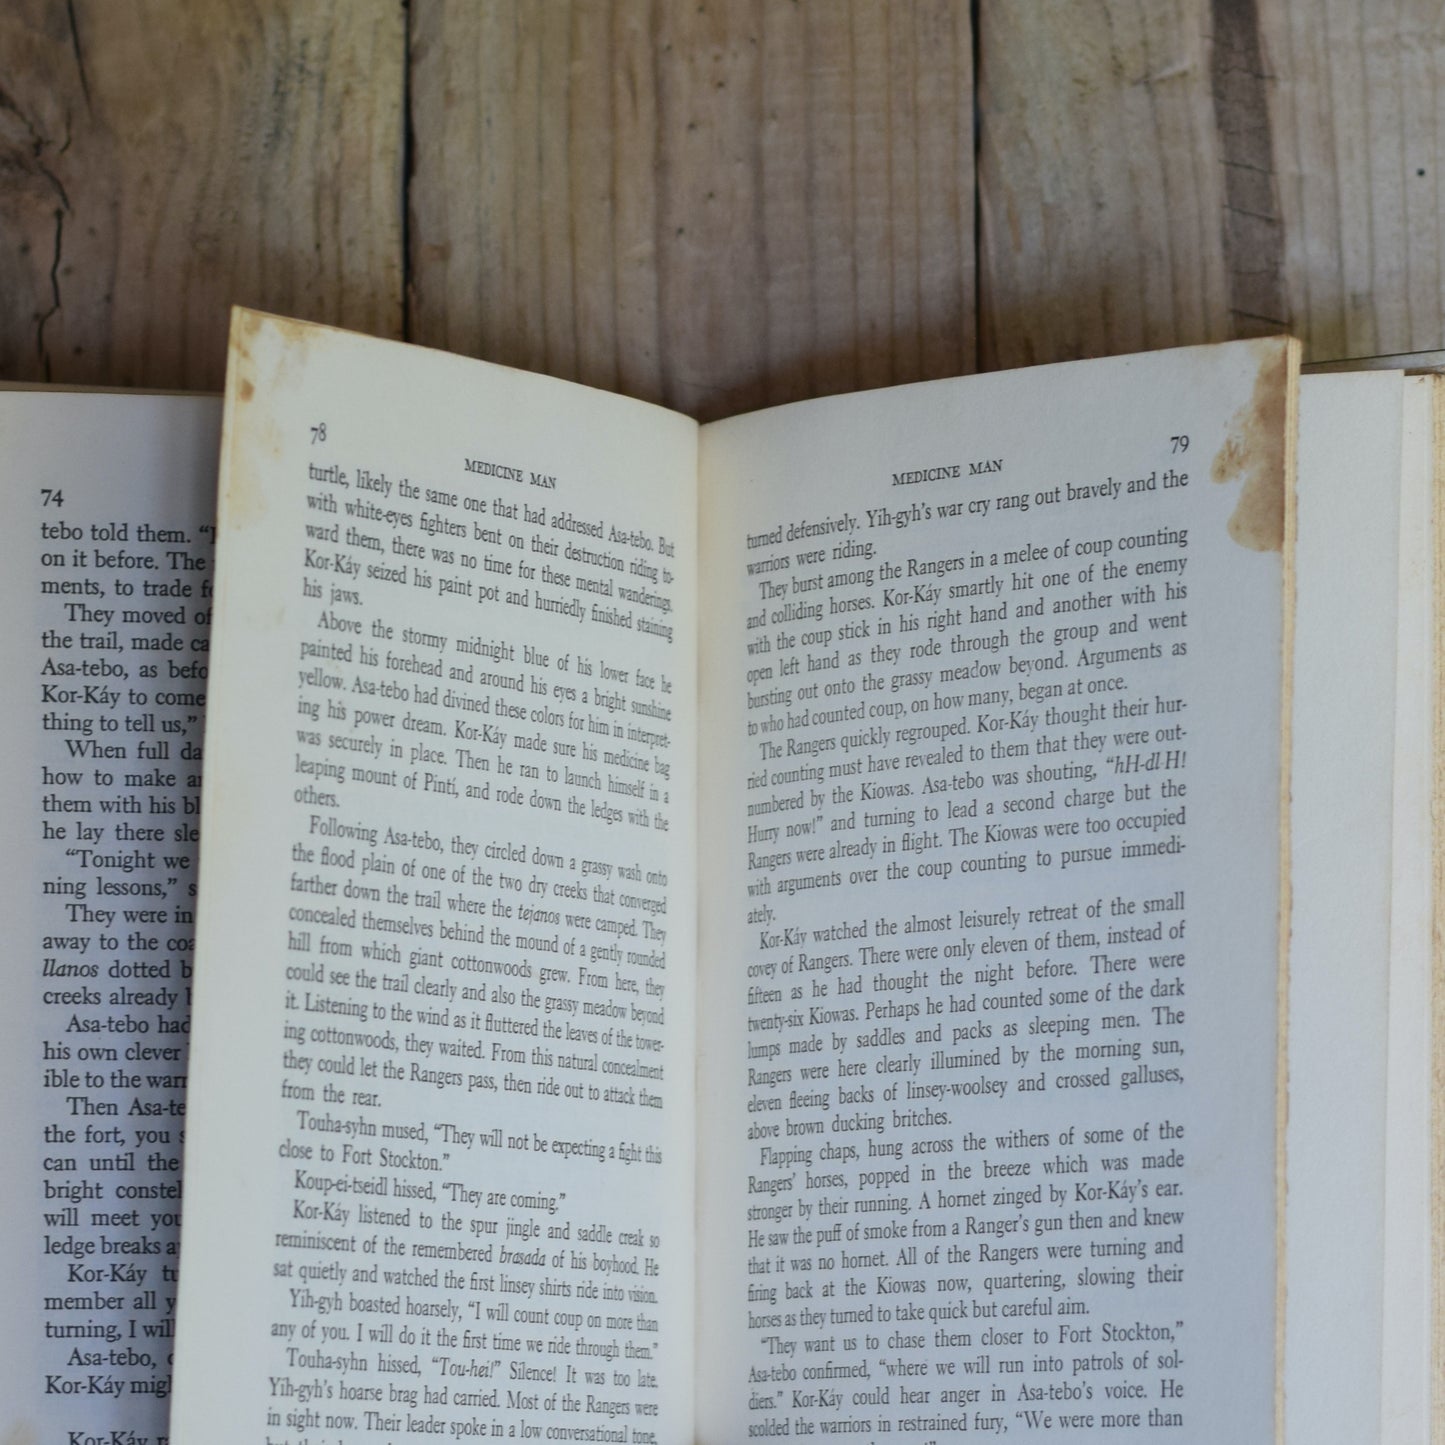 Vintage Fiction Hardback: Bill Burchardt - Medicine Man FIRST EDITION